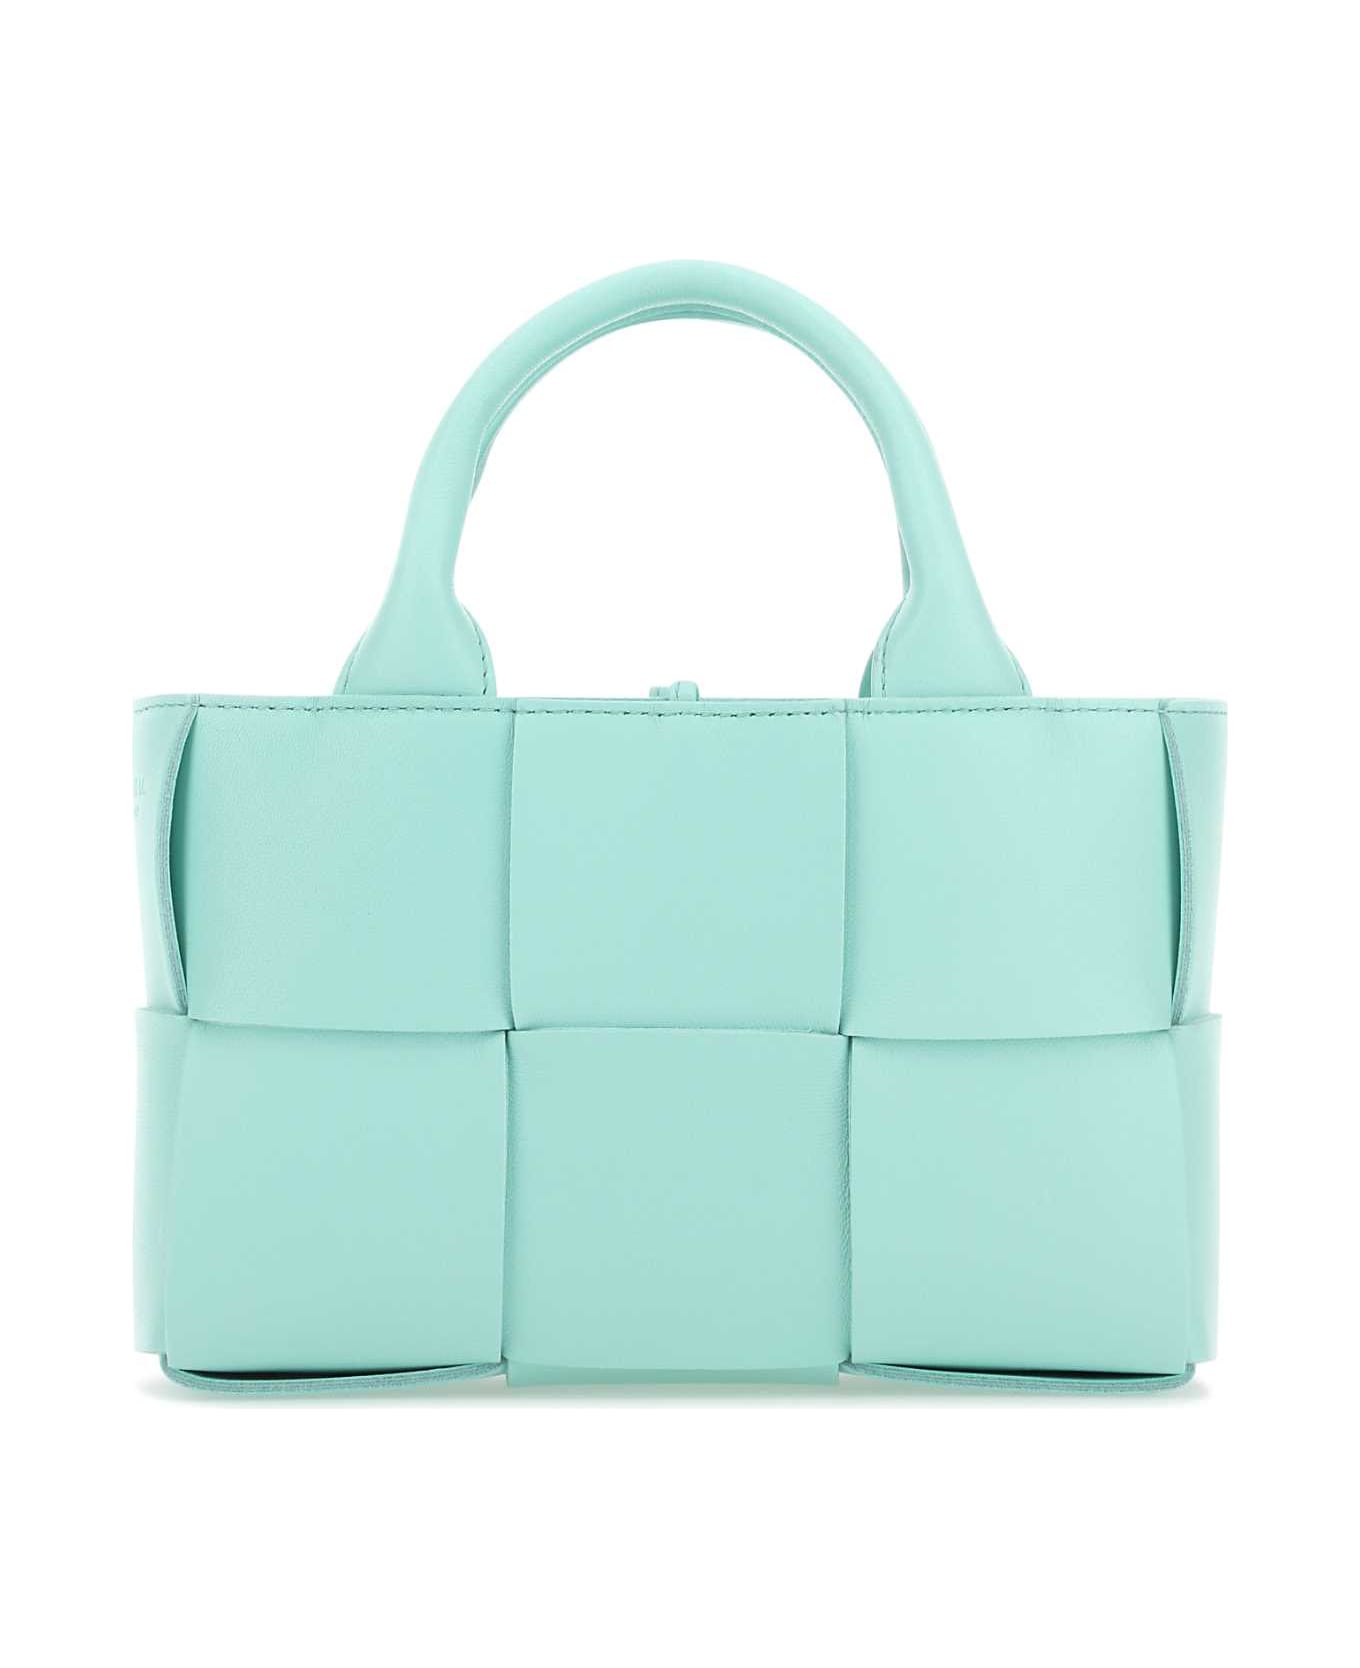 Bottega Veneta Light-blue Leather Candy Arco Handbag - PALEBLU